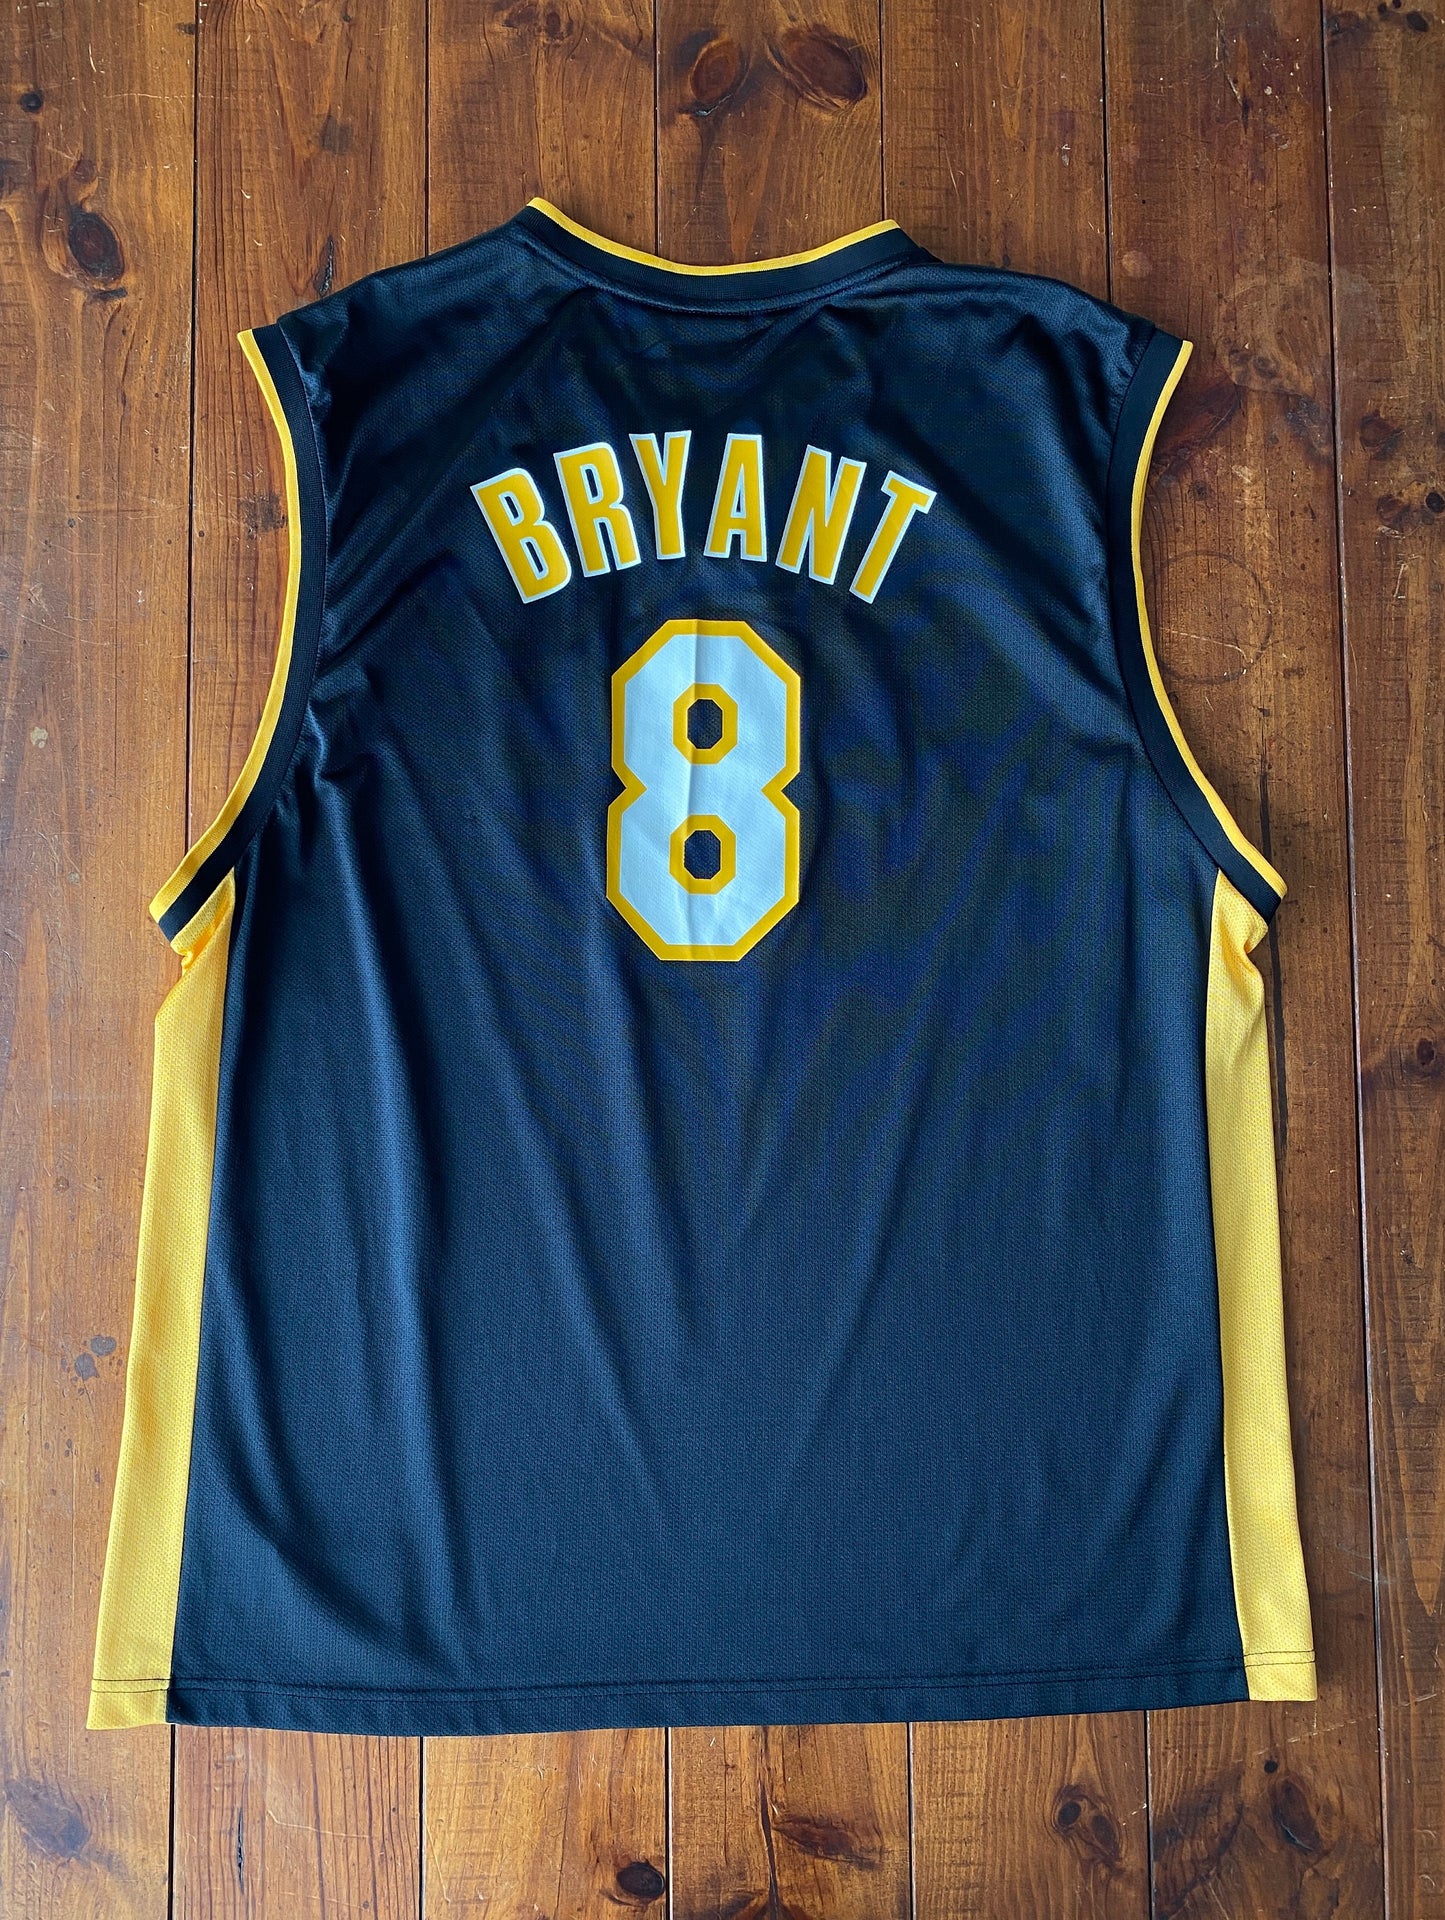 Size XXL. Kobe Bryant #8 Vintage Lakers Jersey by reebok